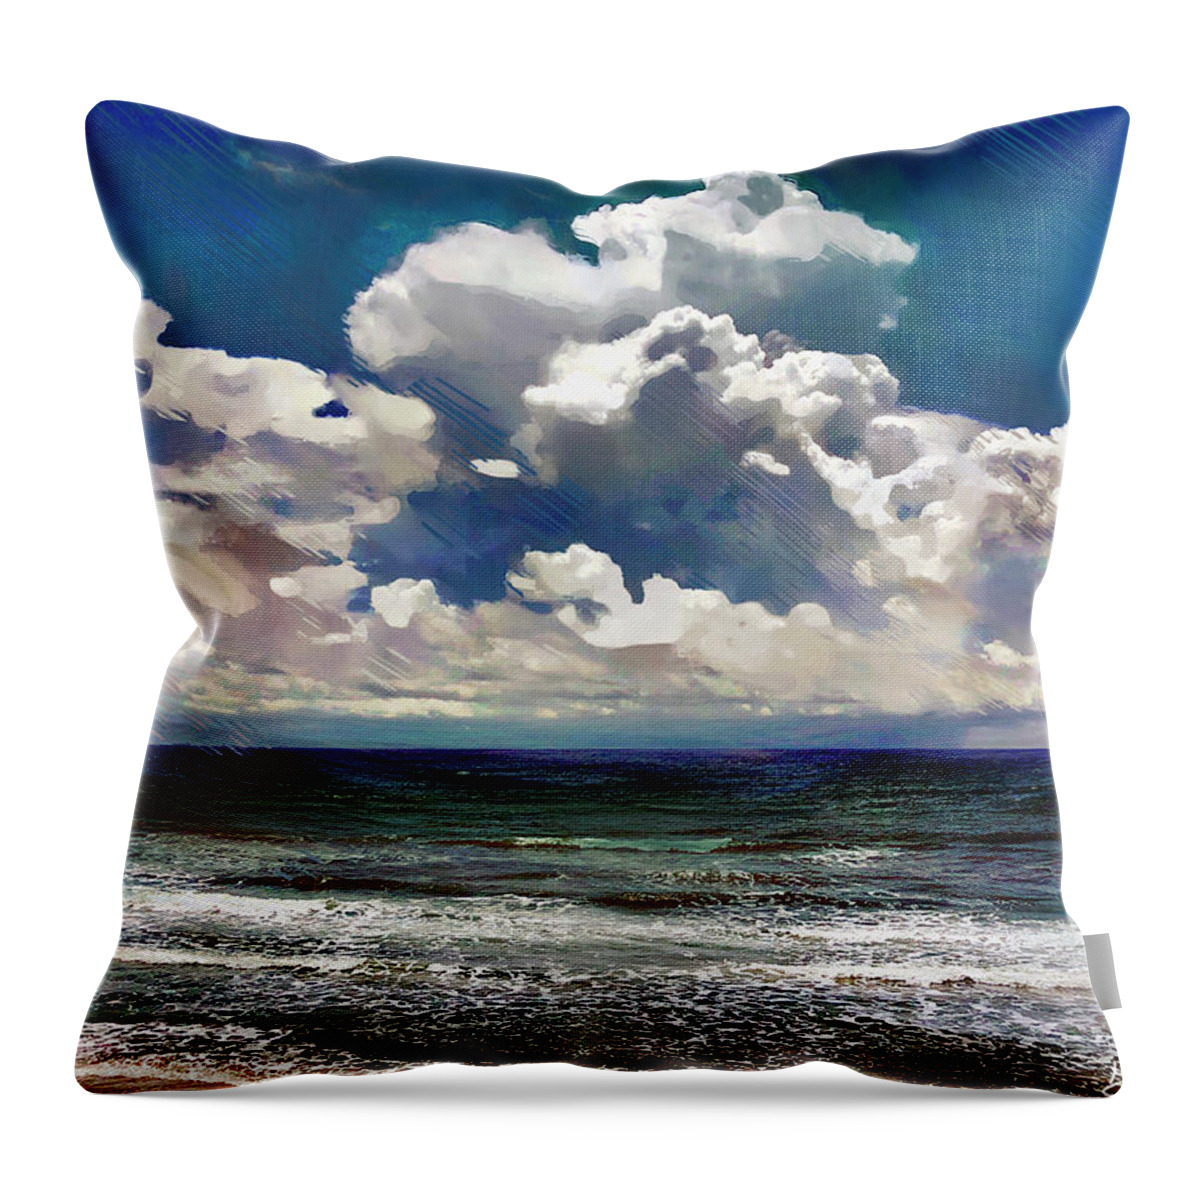 Beach Throw Pillow featuring the photograph Surreal Summer Beach by GW Mireles